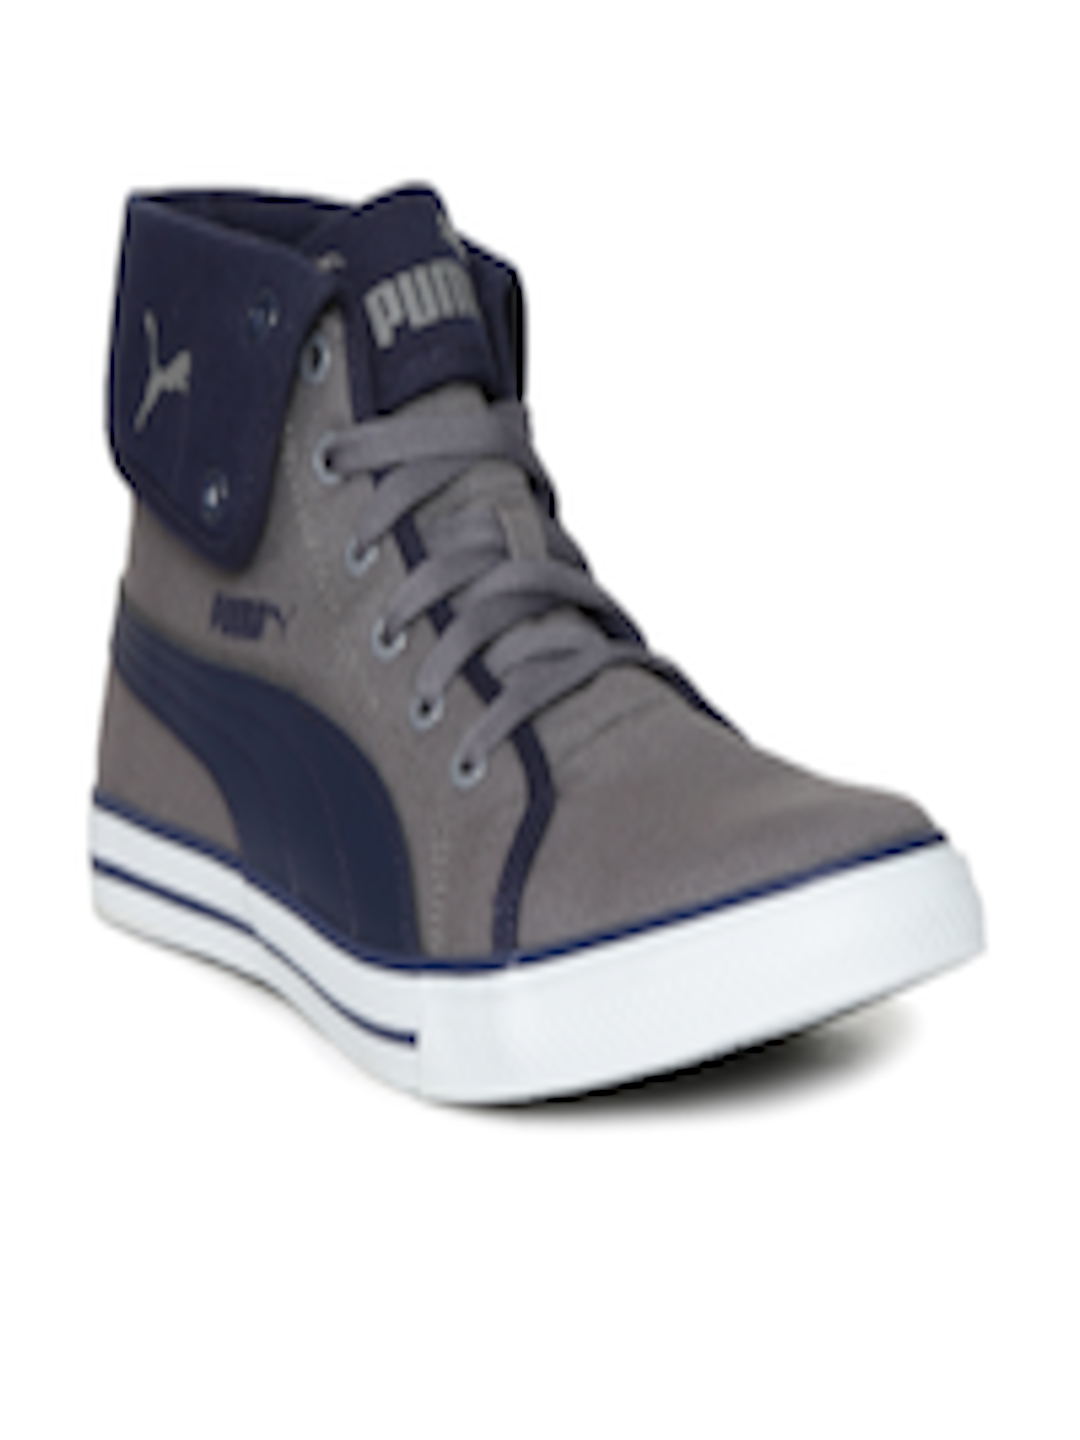 Buy Puma Men Grey & Blue Colourblocked Mid Top Sneakers - Casual Shoes ...